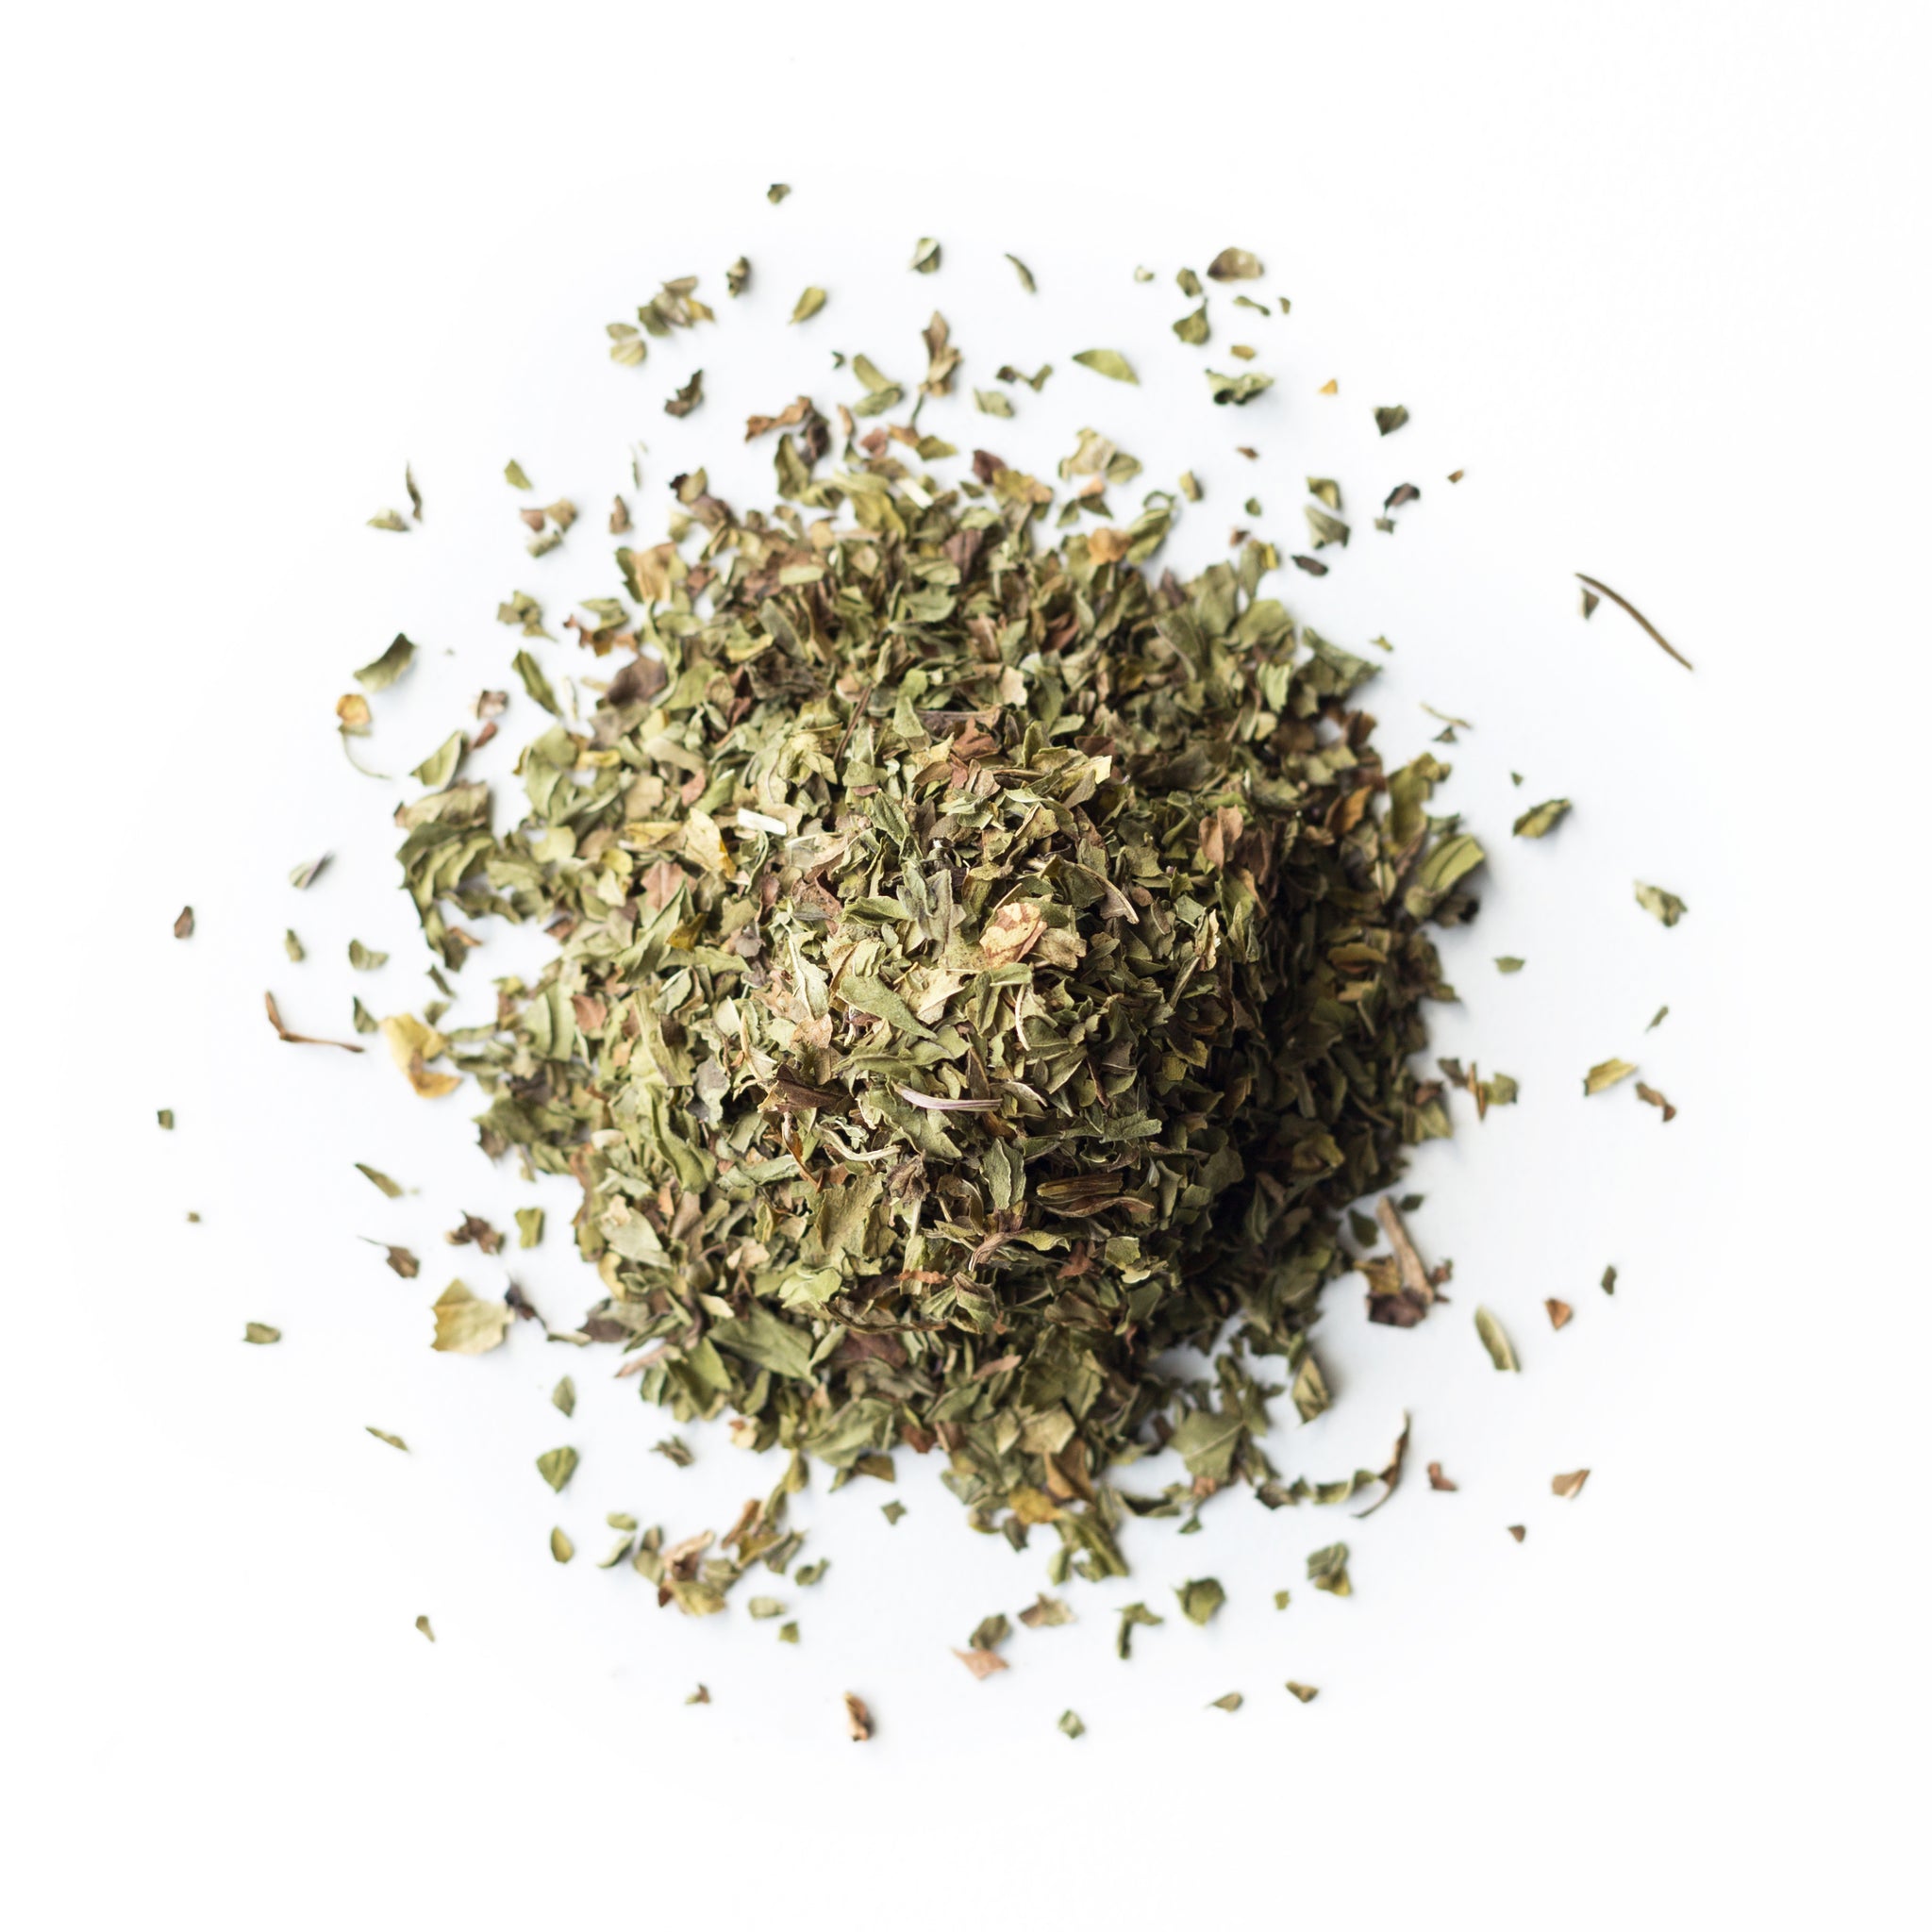 Rishi Organic Peppermint Loose Leaf Tea - 250g